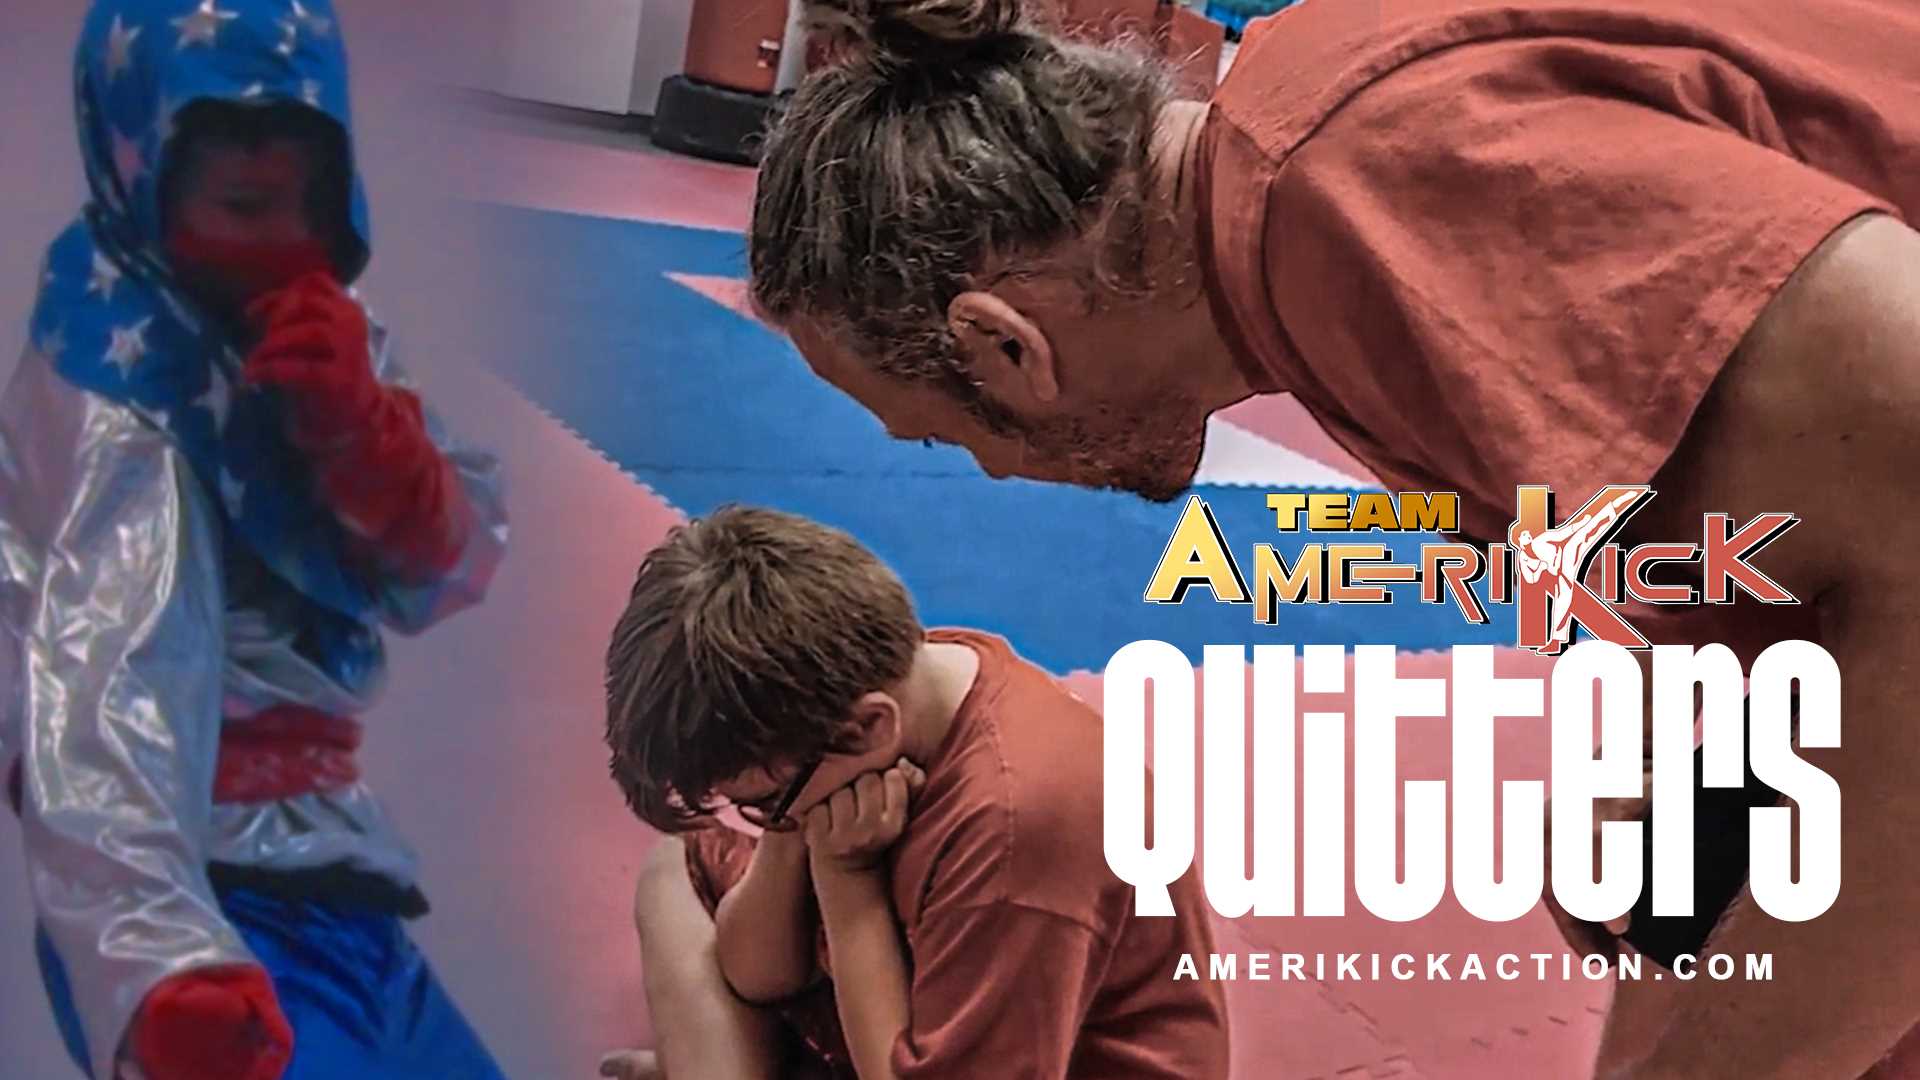 Amerikick Action | Team Amerikick: Quitters